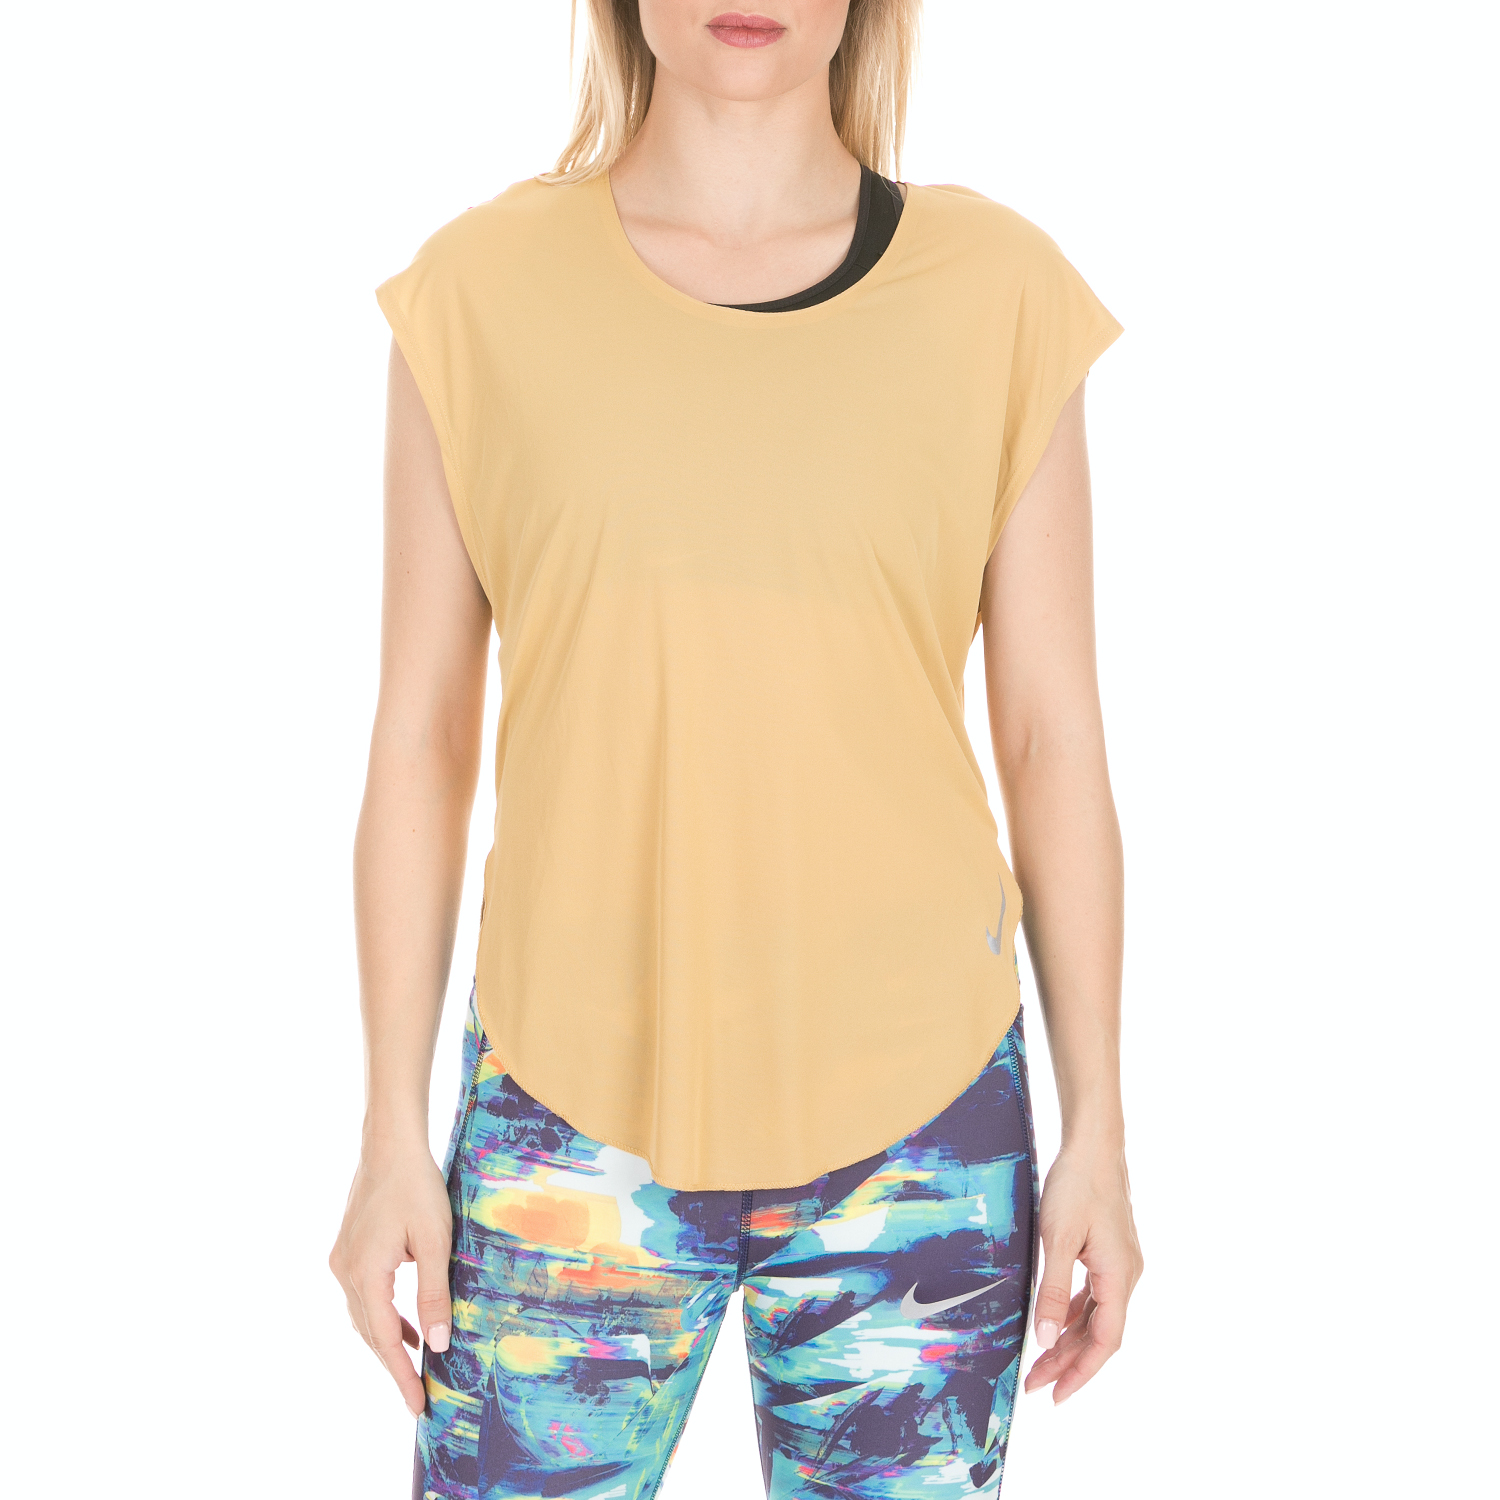 NIKE - Γυναικείο t-shirt ΝΙΚΕ CITY SLEEK χρυσό Γυναικεία/Ρούχα/Αθλητικά/T-shirt-Τοπ